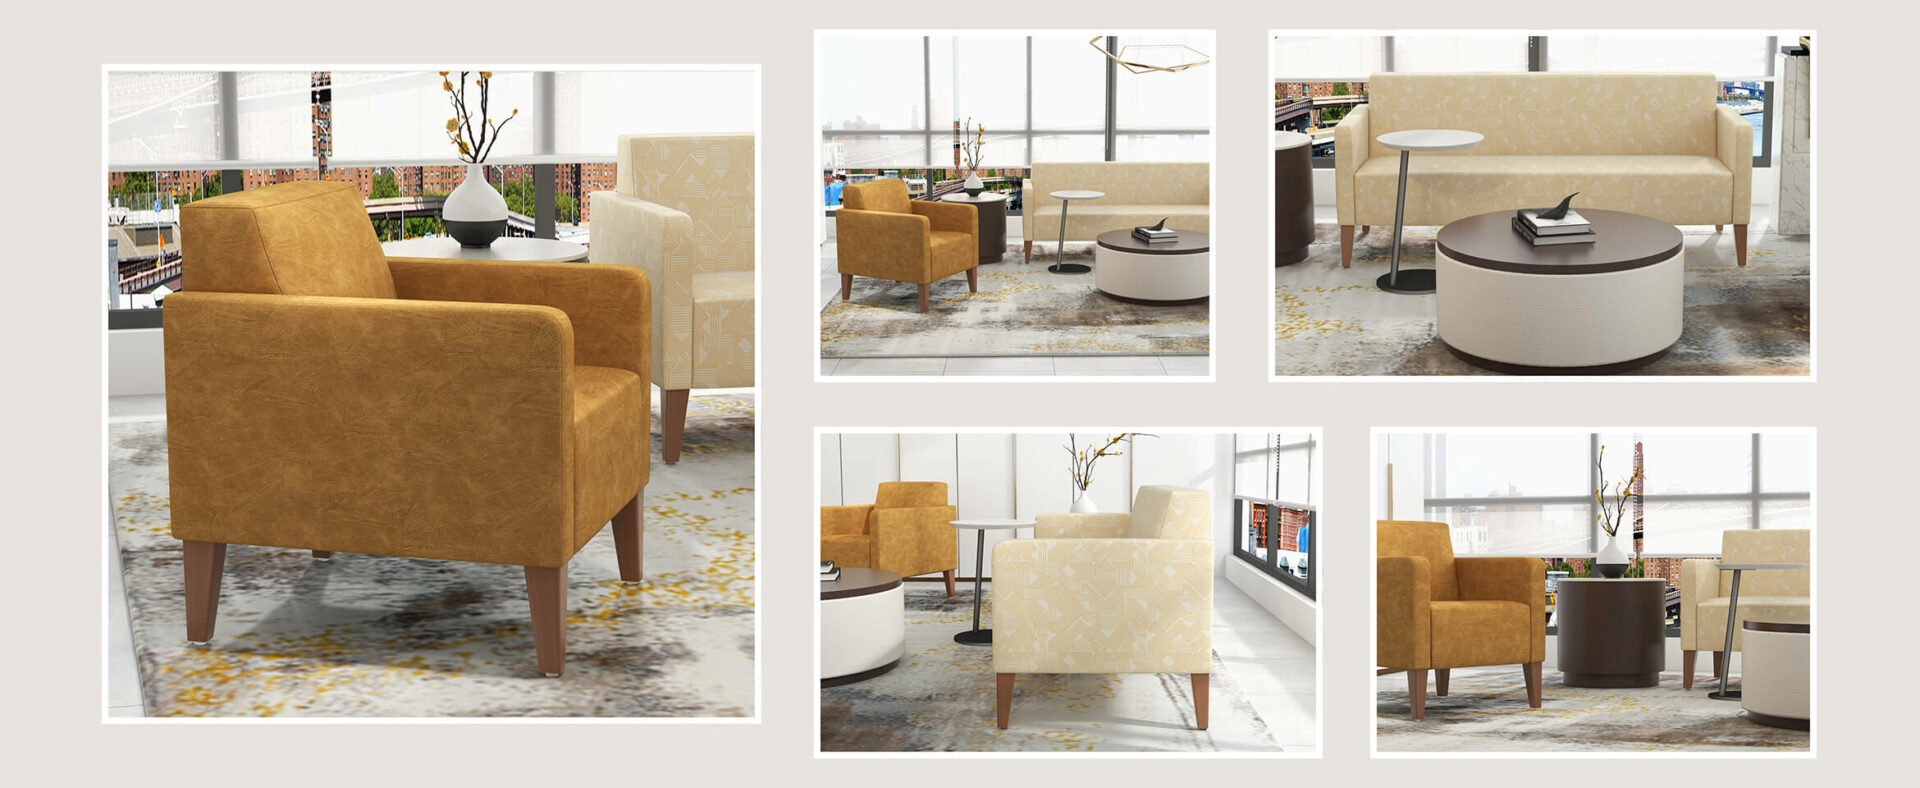 Lounge Upholstered by Modern, Kwalu Livorno Fully Kwalu\'s